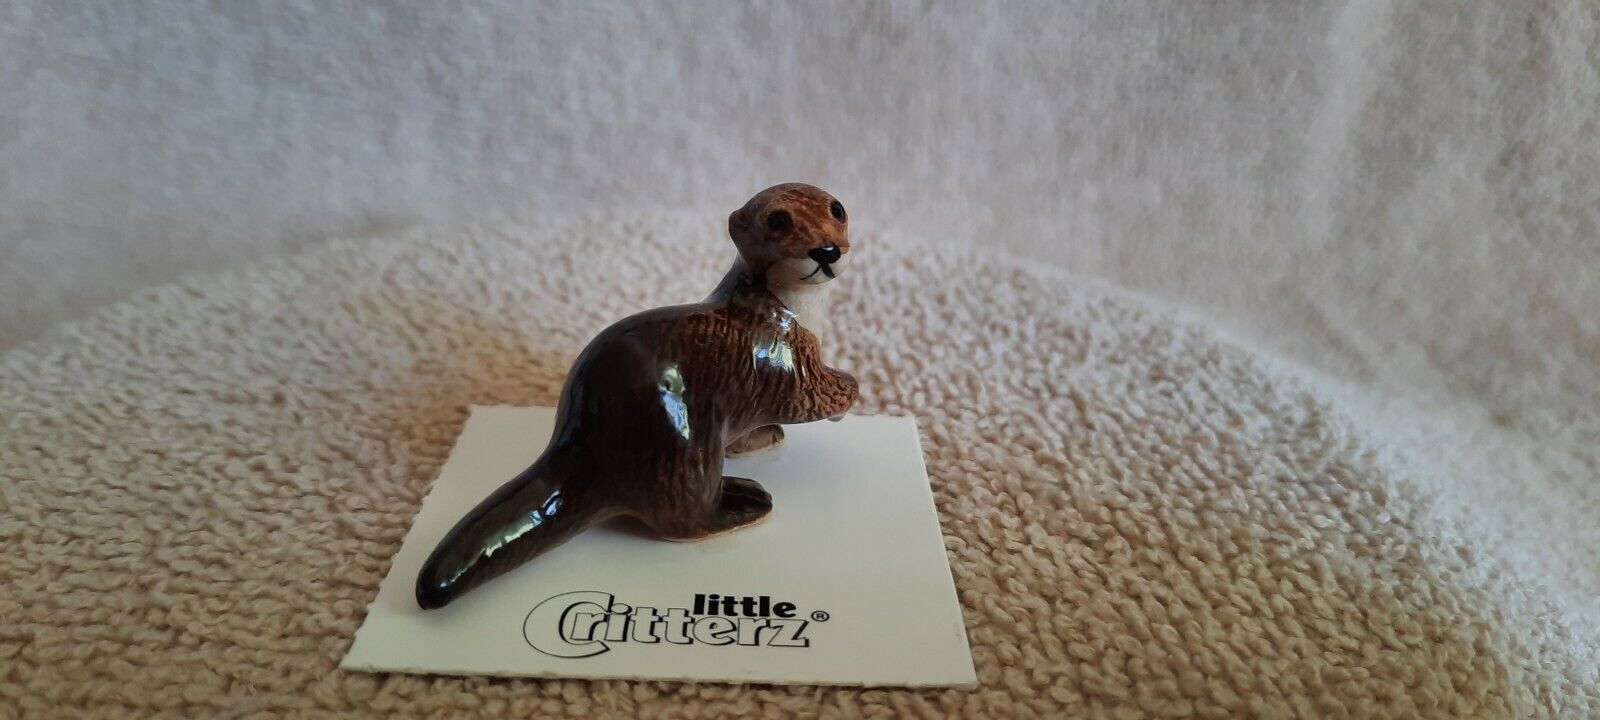 Little Critterz River Otter "glide" Miniature Figurine New Free Shipping Lc821